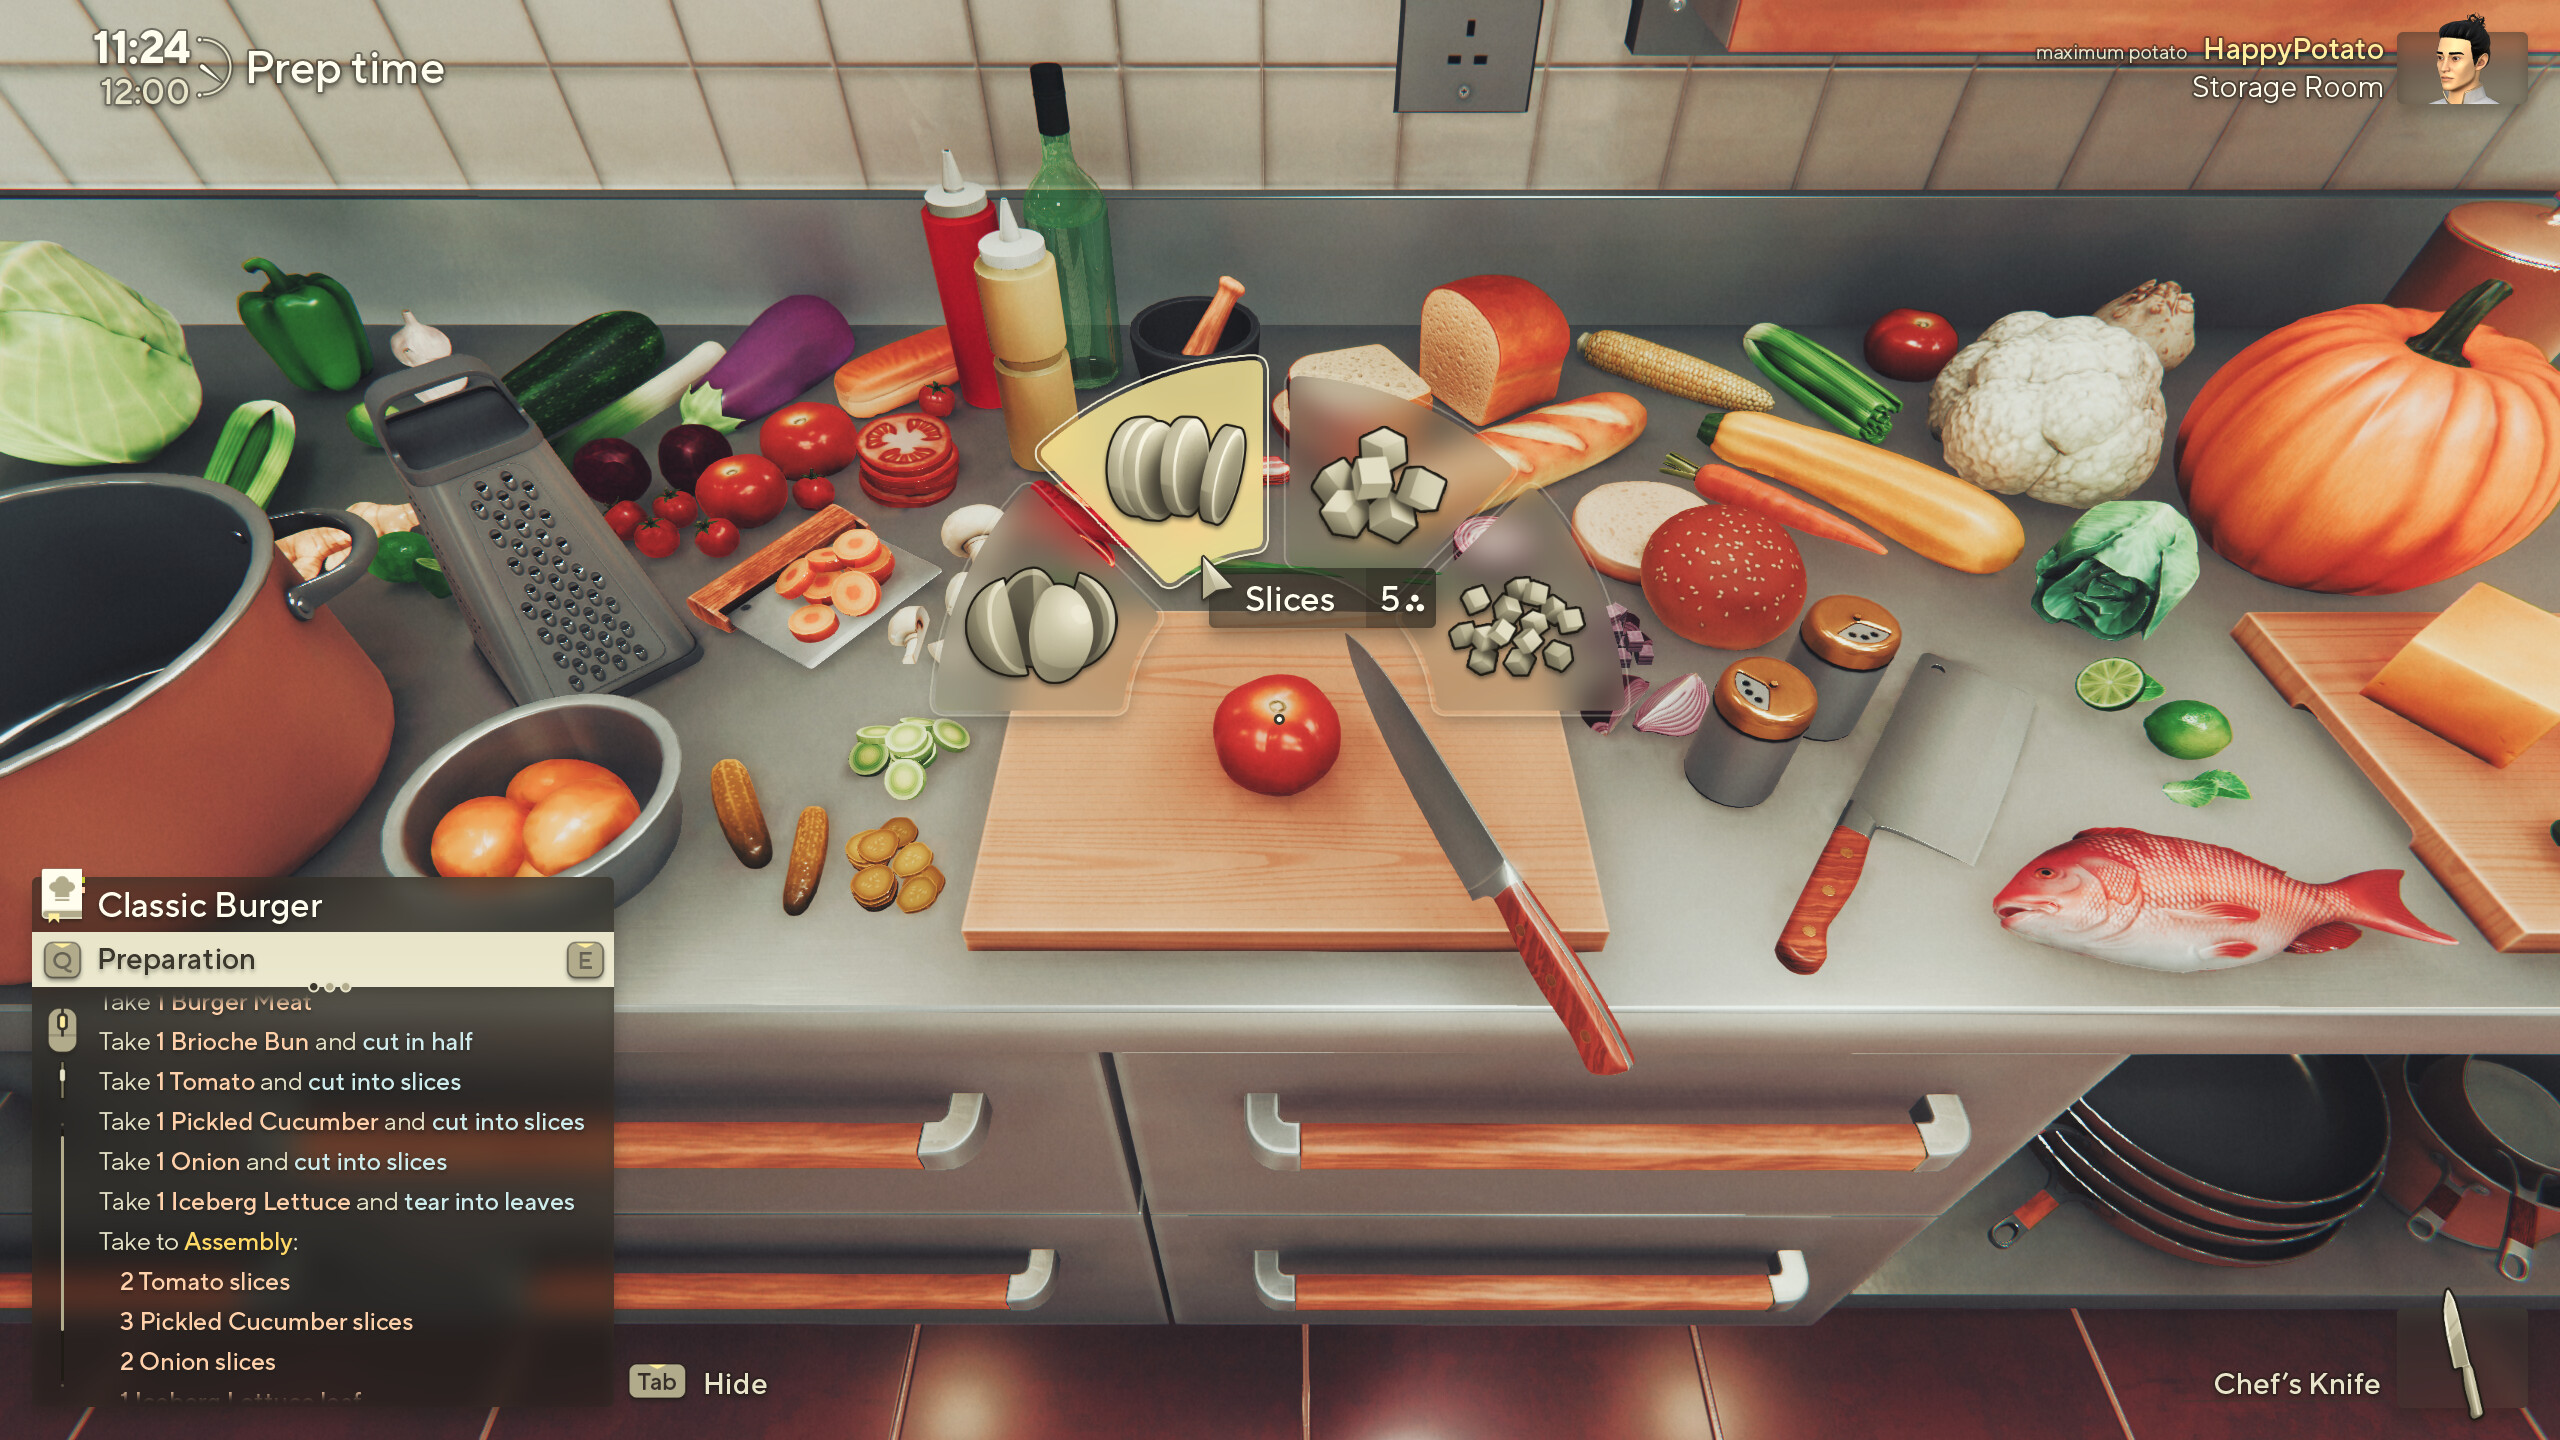 Kitchen Simulator 2 Price history · SteamDB